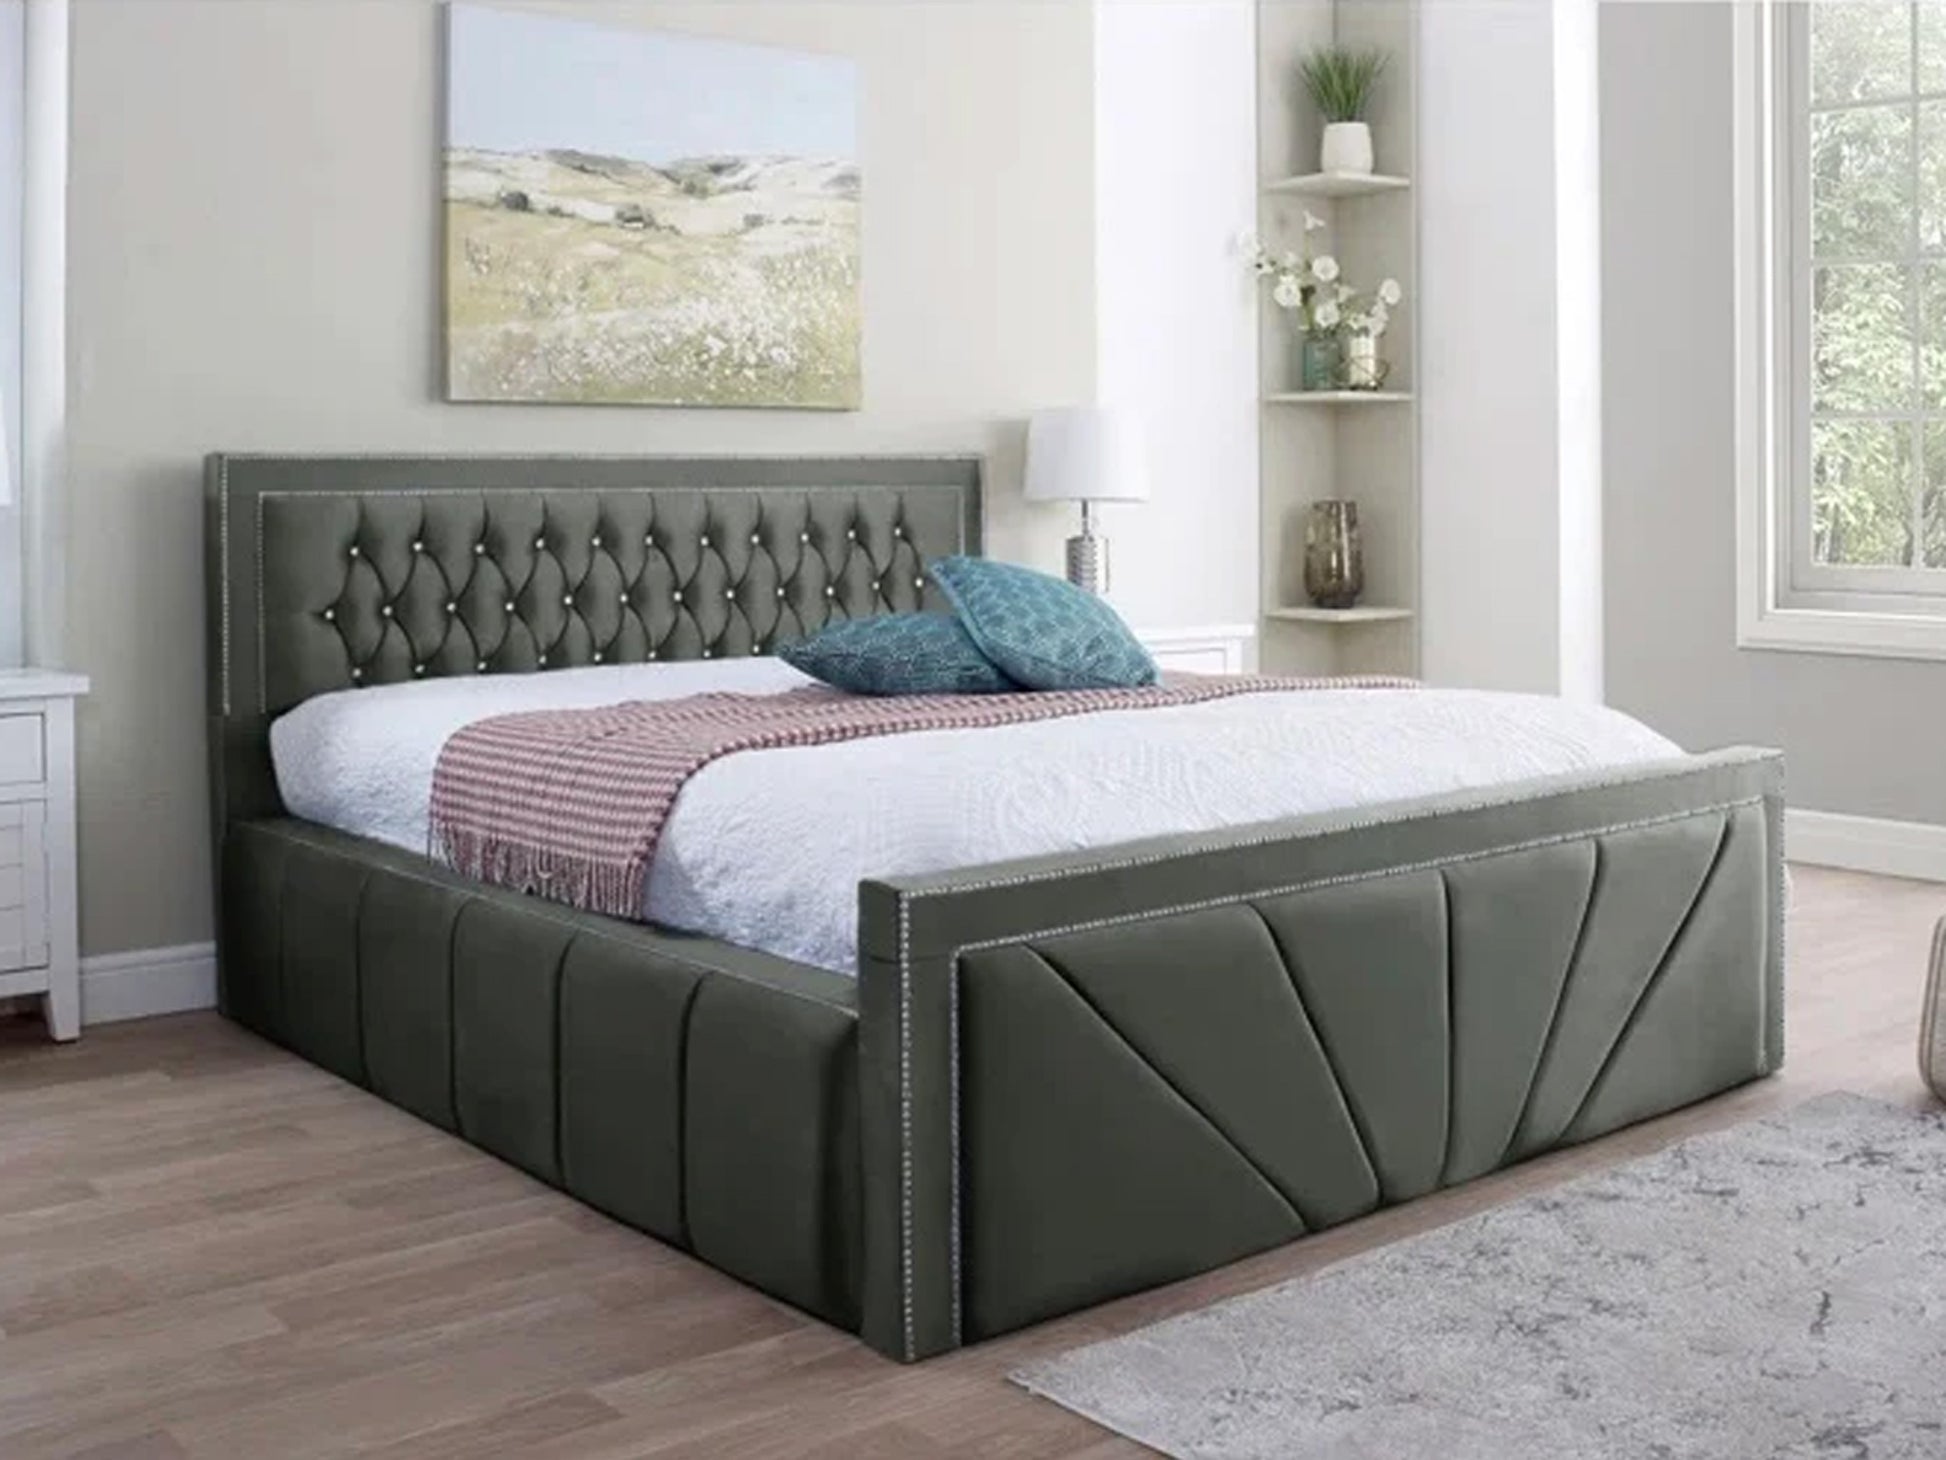 Cozy Crest Bed Frame - Unique Style Beds. 